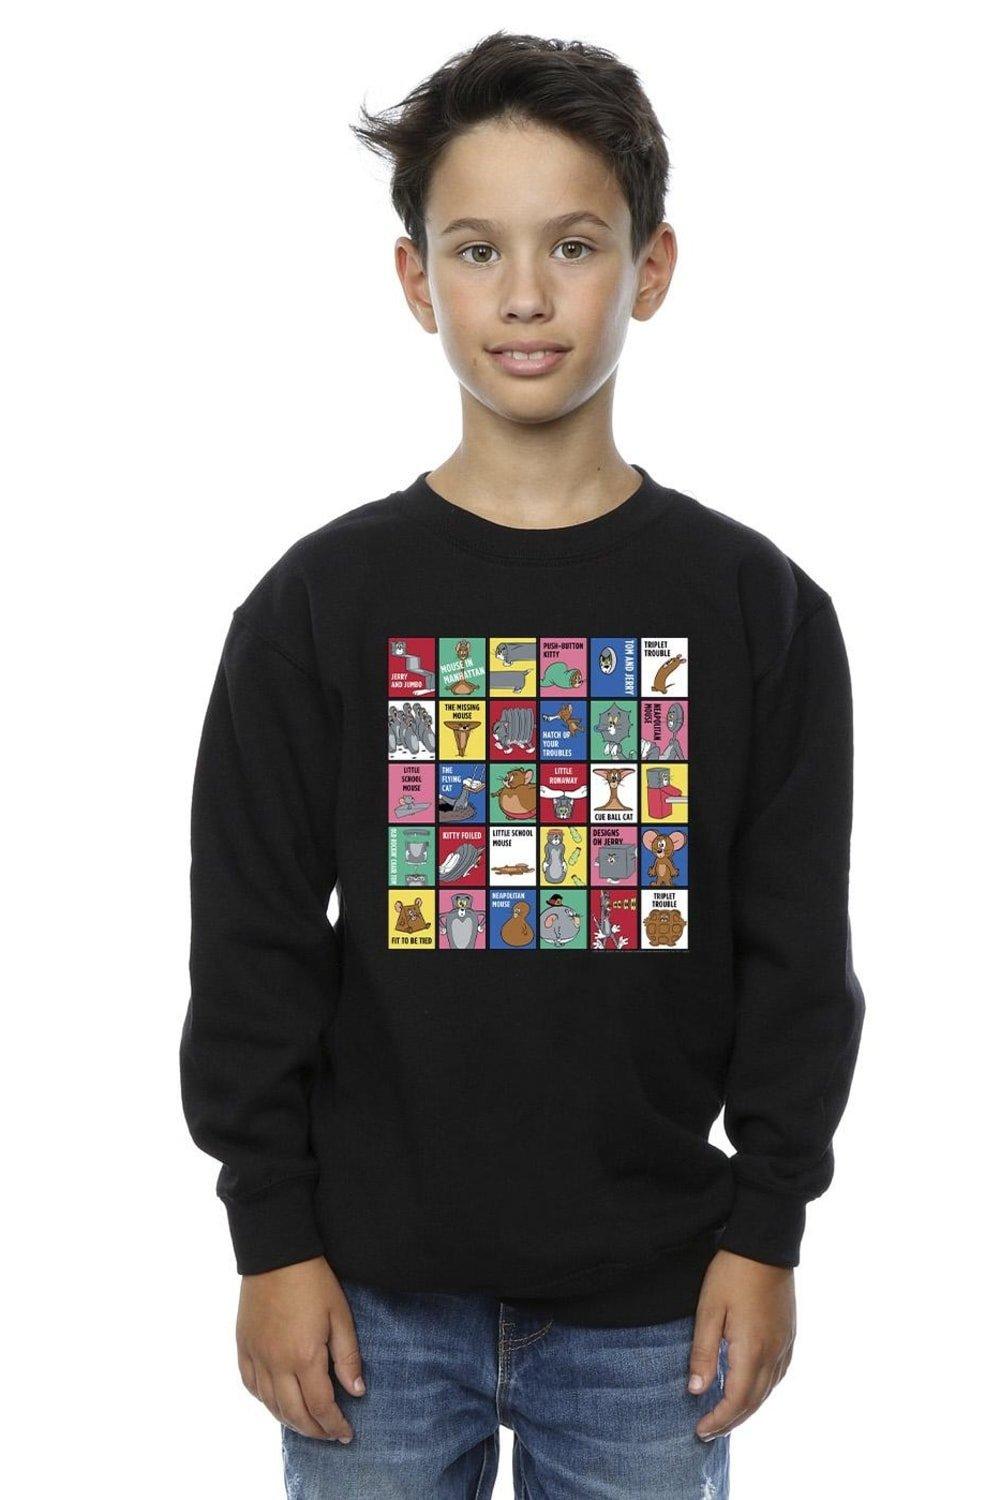 Grid Squares Sweatshirt